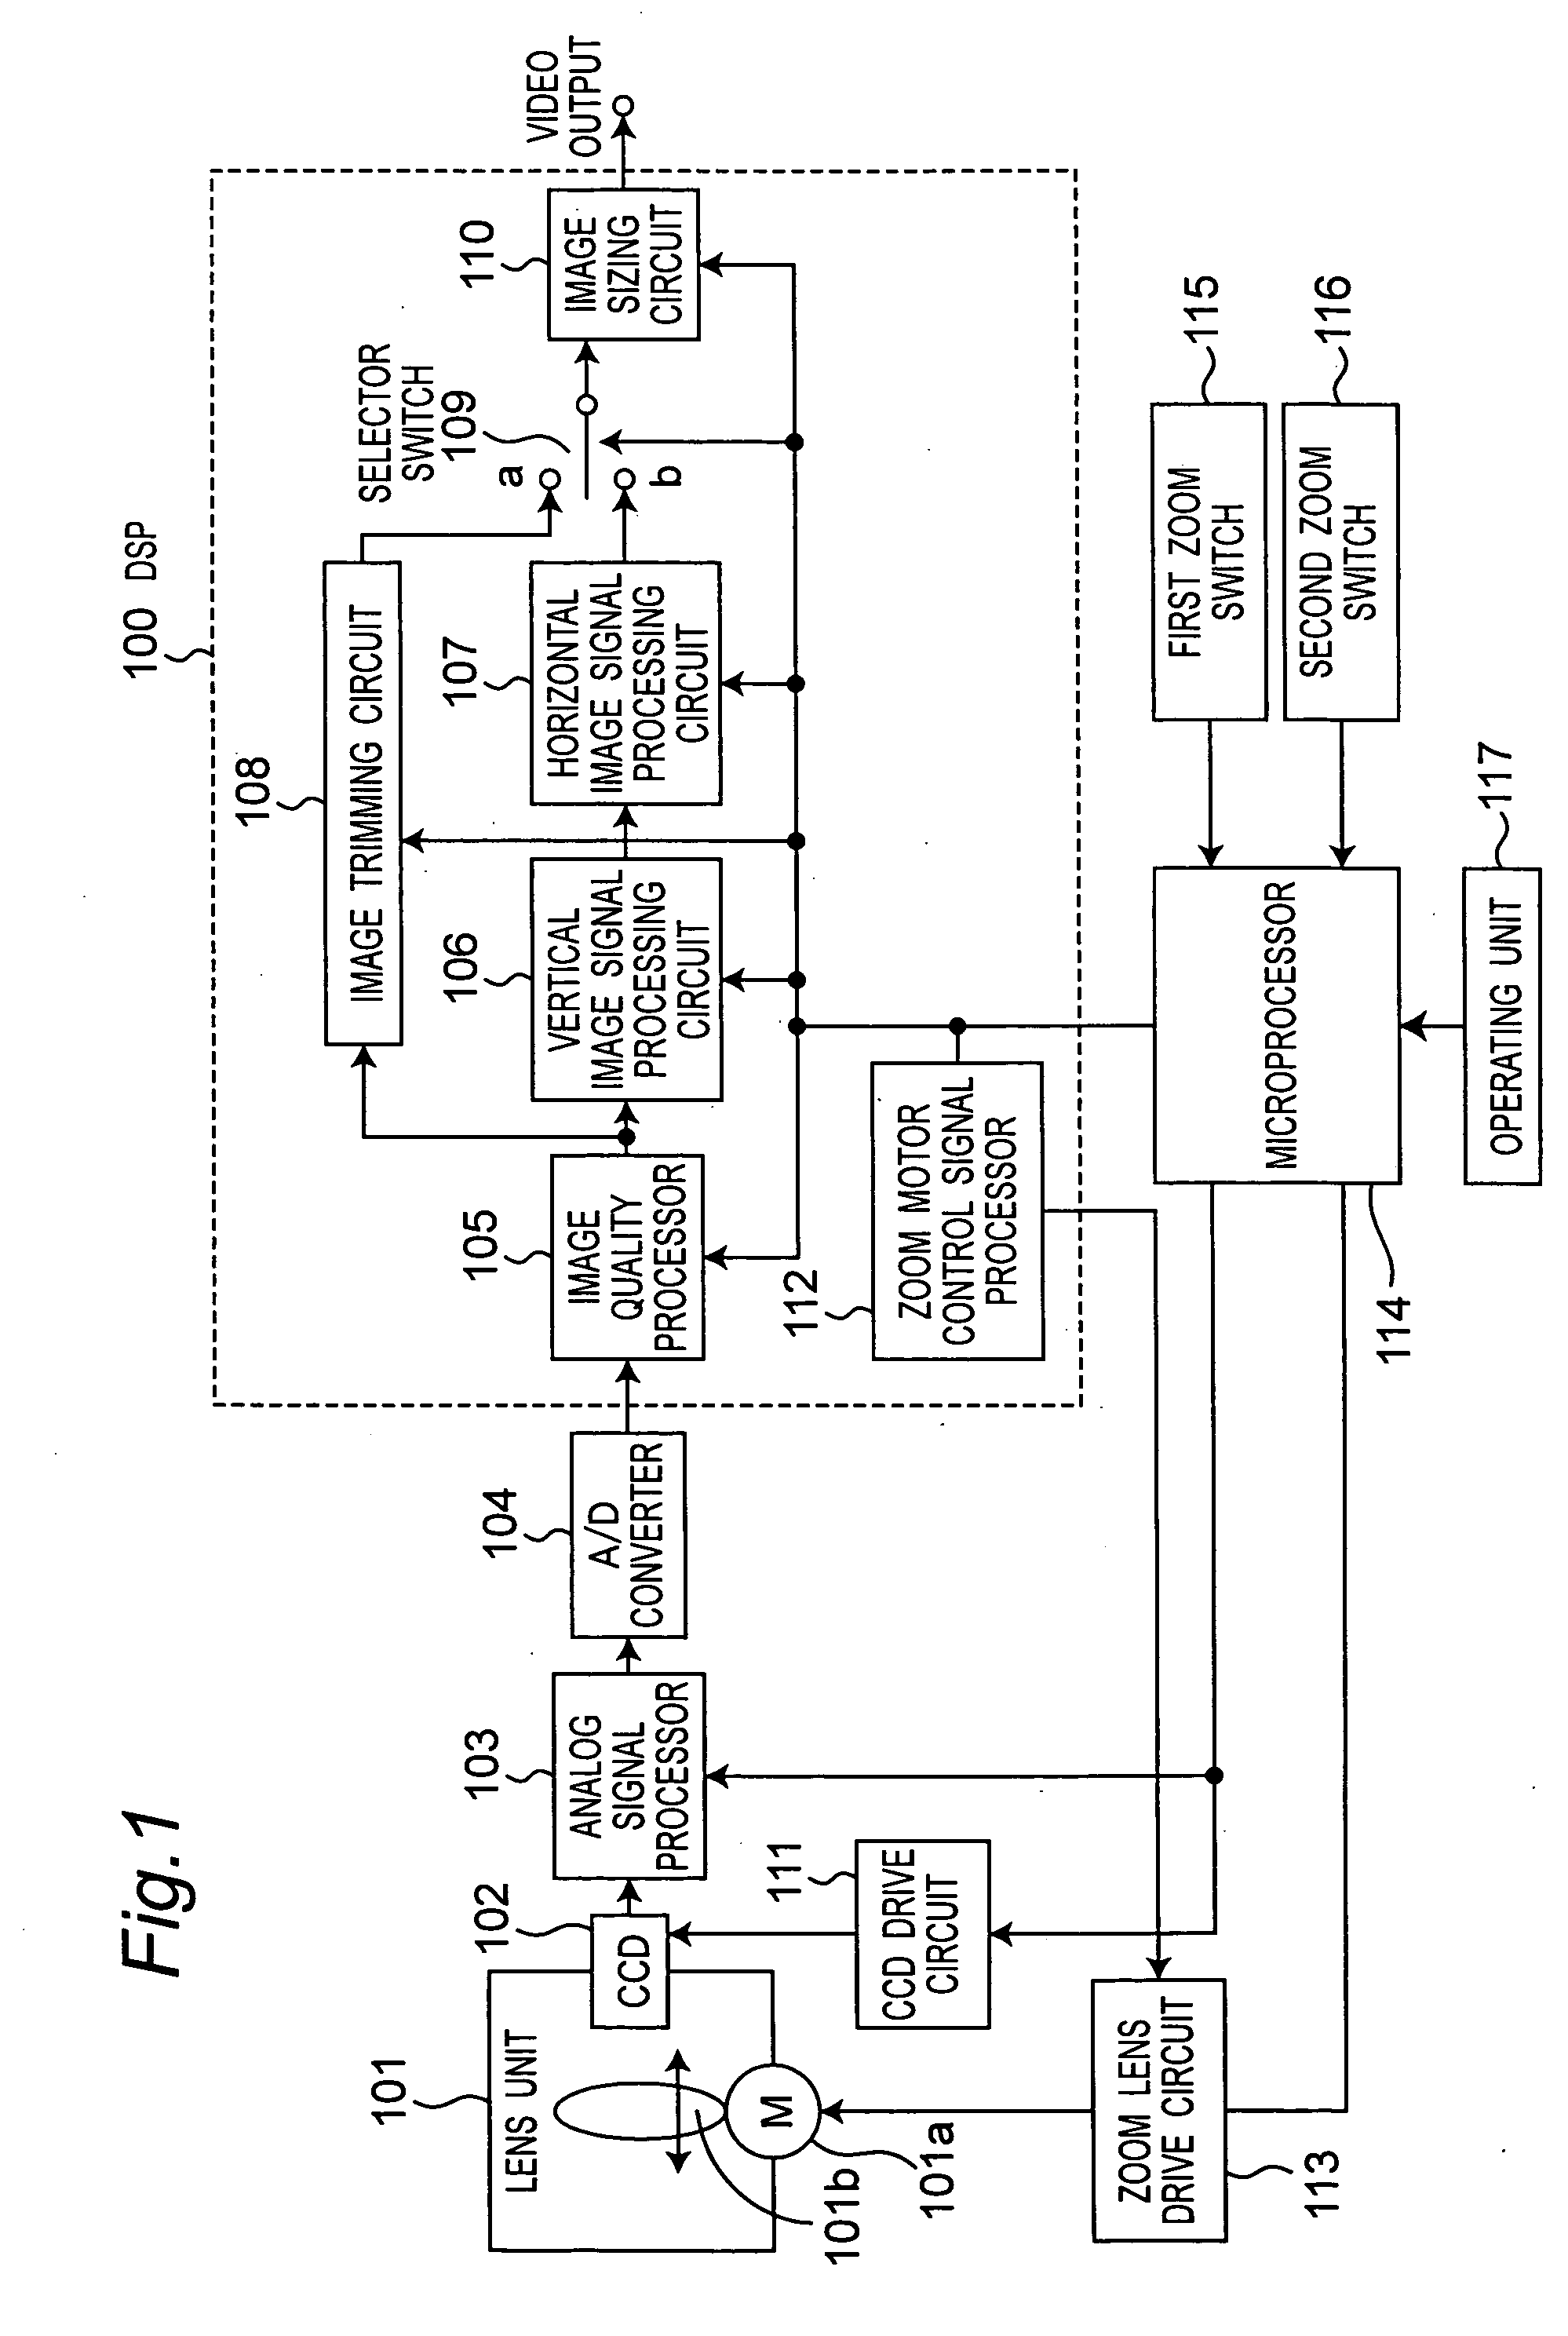 Image enlarging apparatus and method